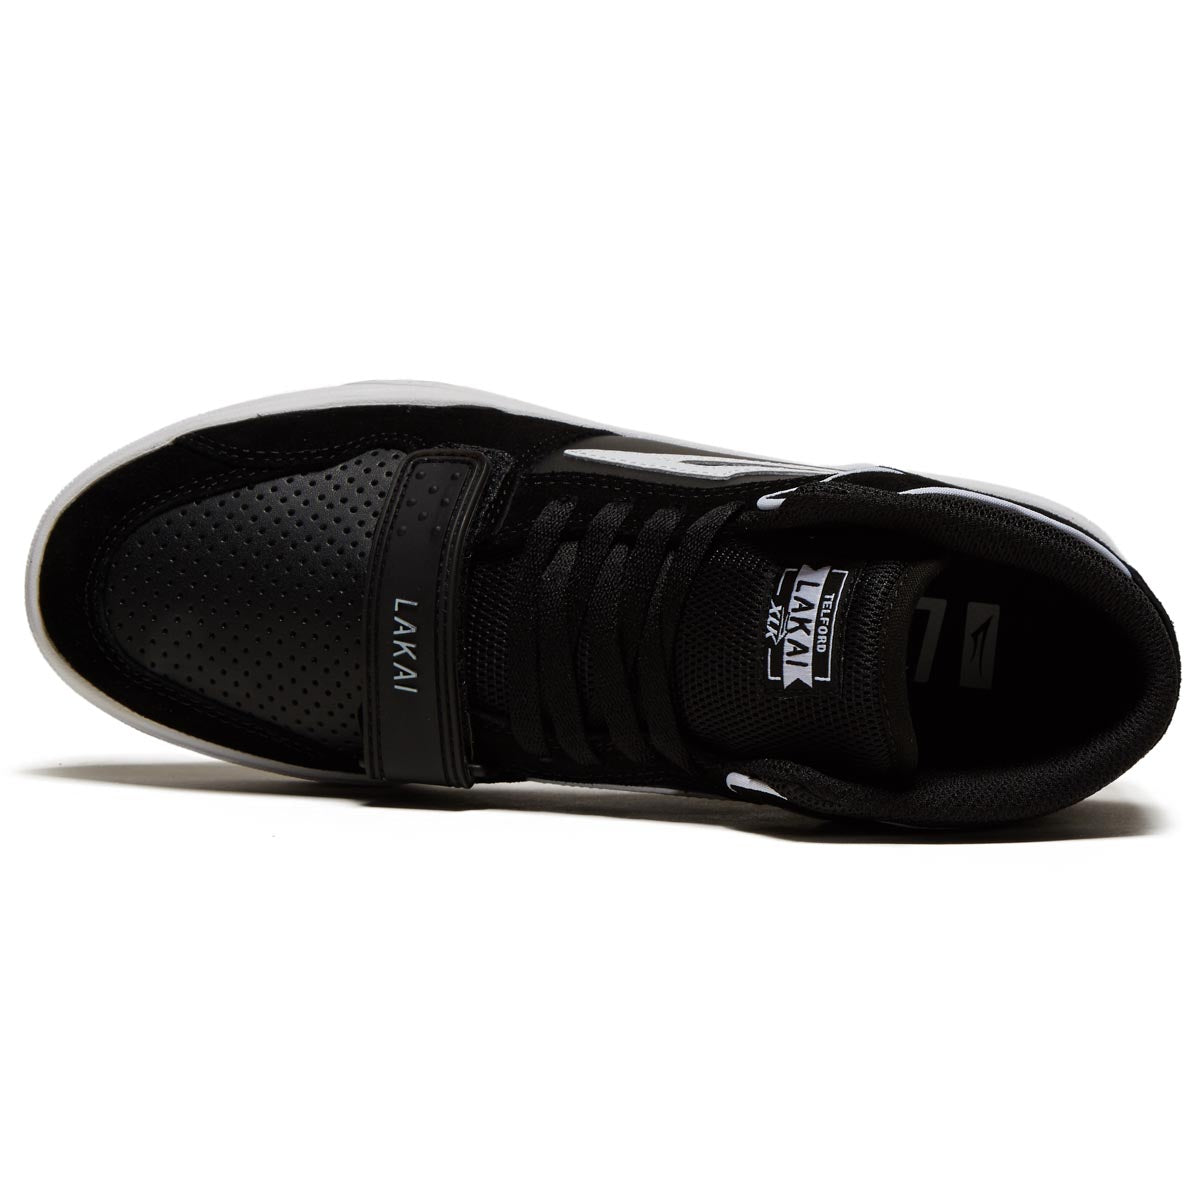 Lakai Telford Mid Shoes - Black Suede image 3